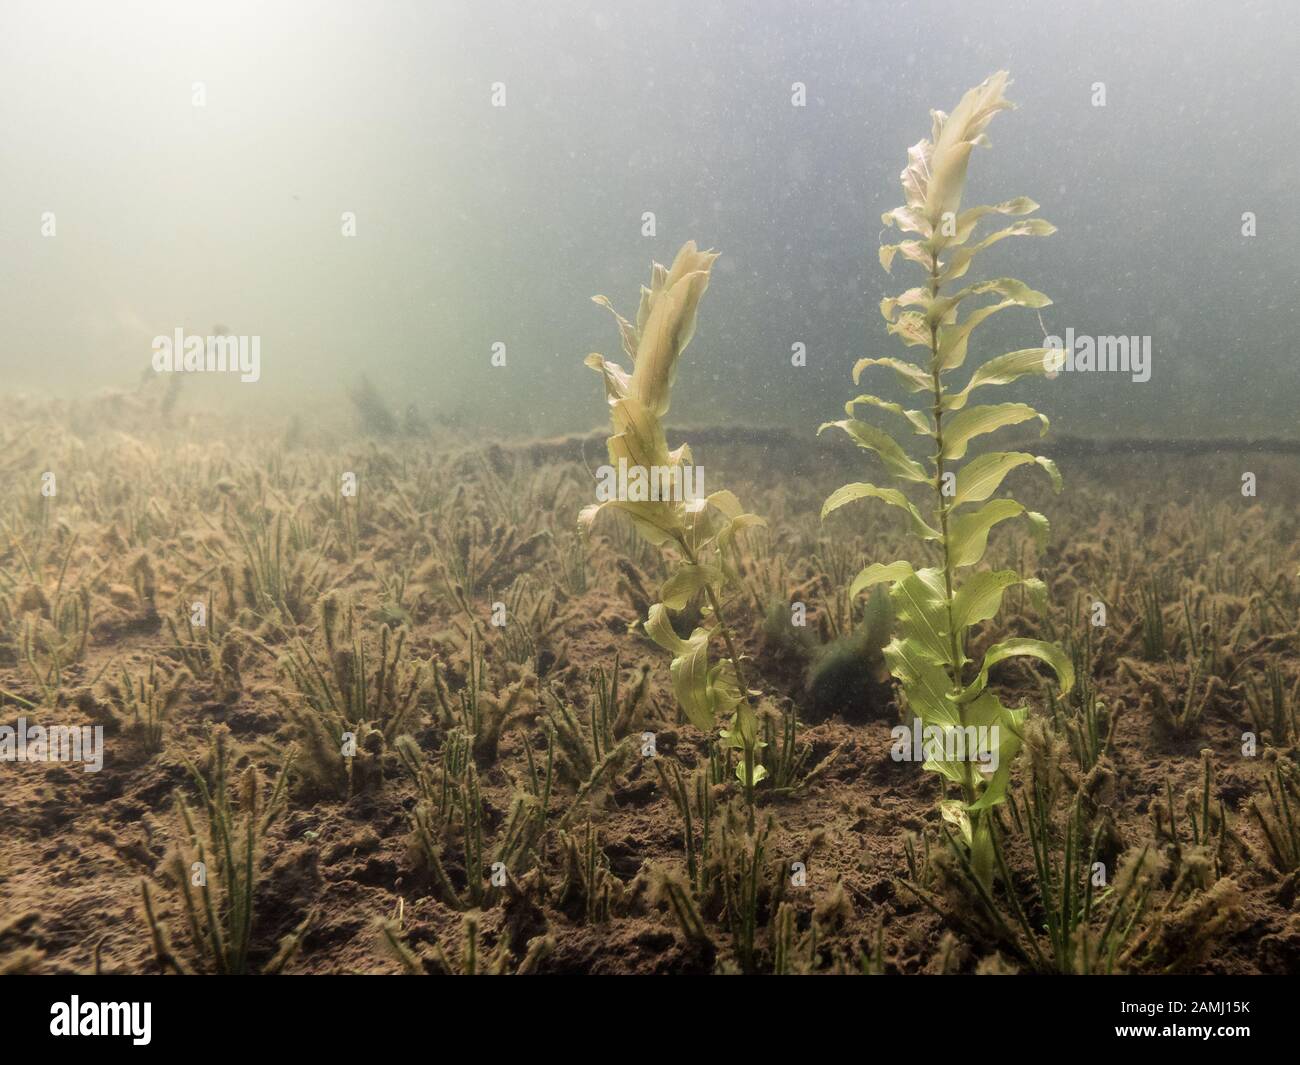 Claspingleaf pondweed underwater on lake bottom Stock Photo